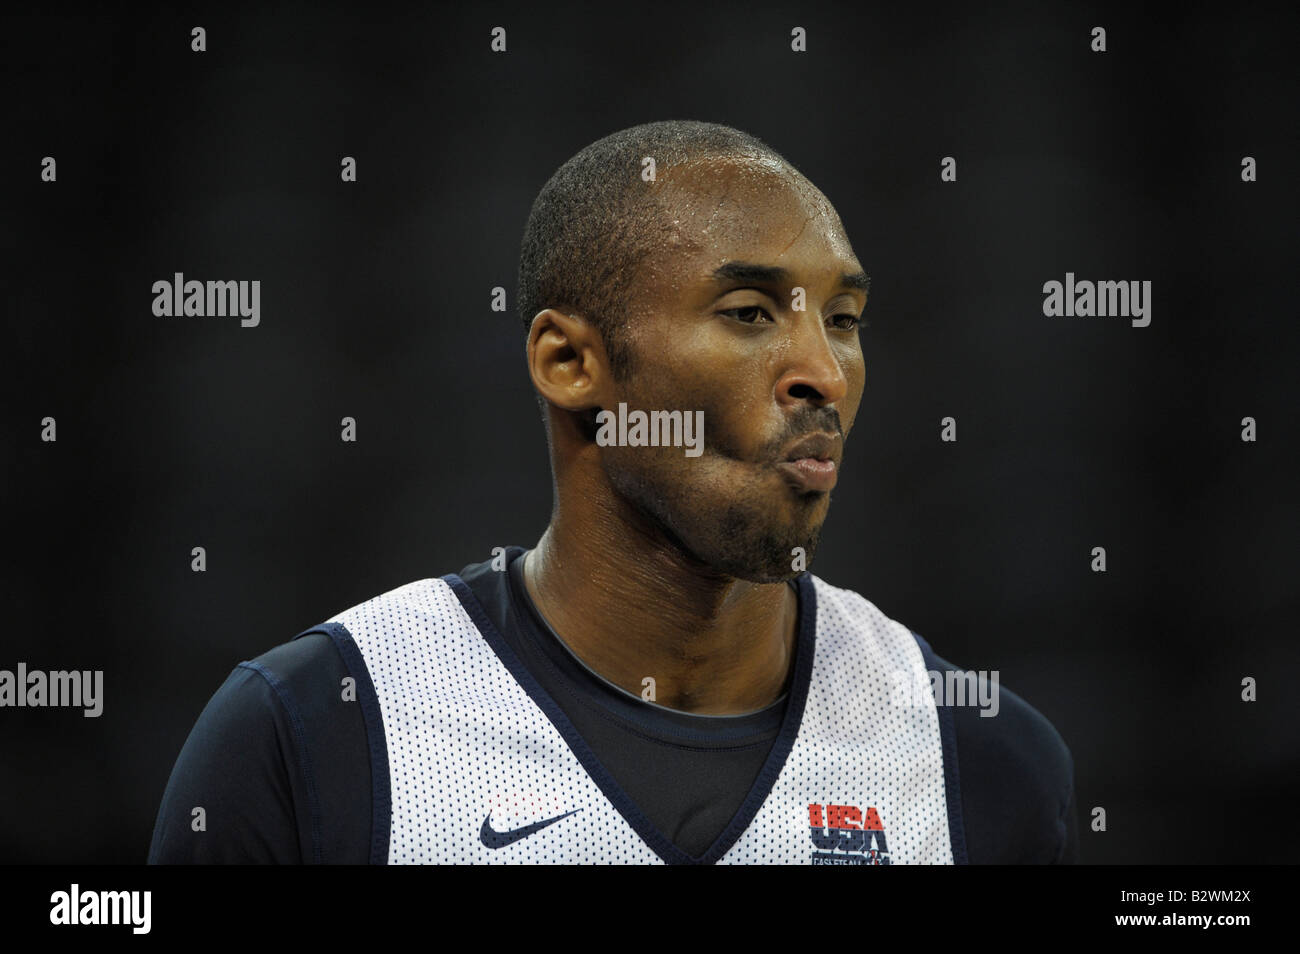 U.S. men senior basketball team player Kobe Bryant Stock Photo